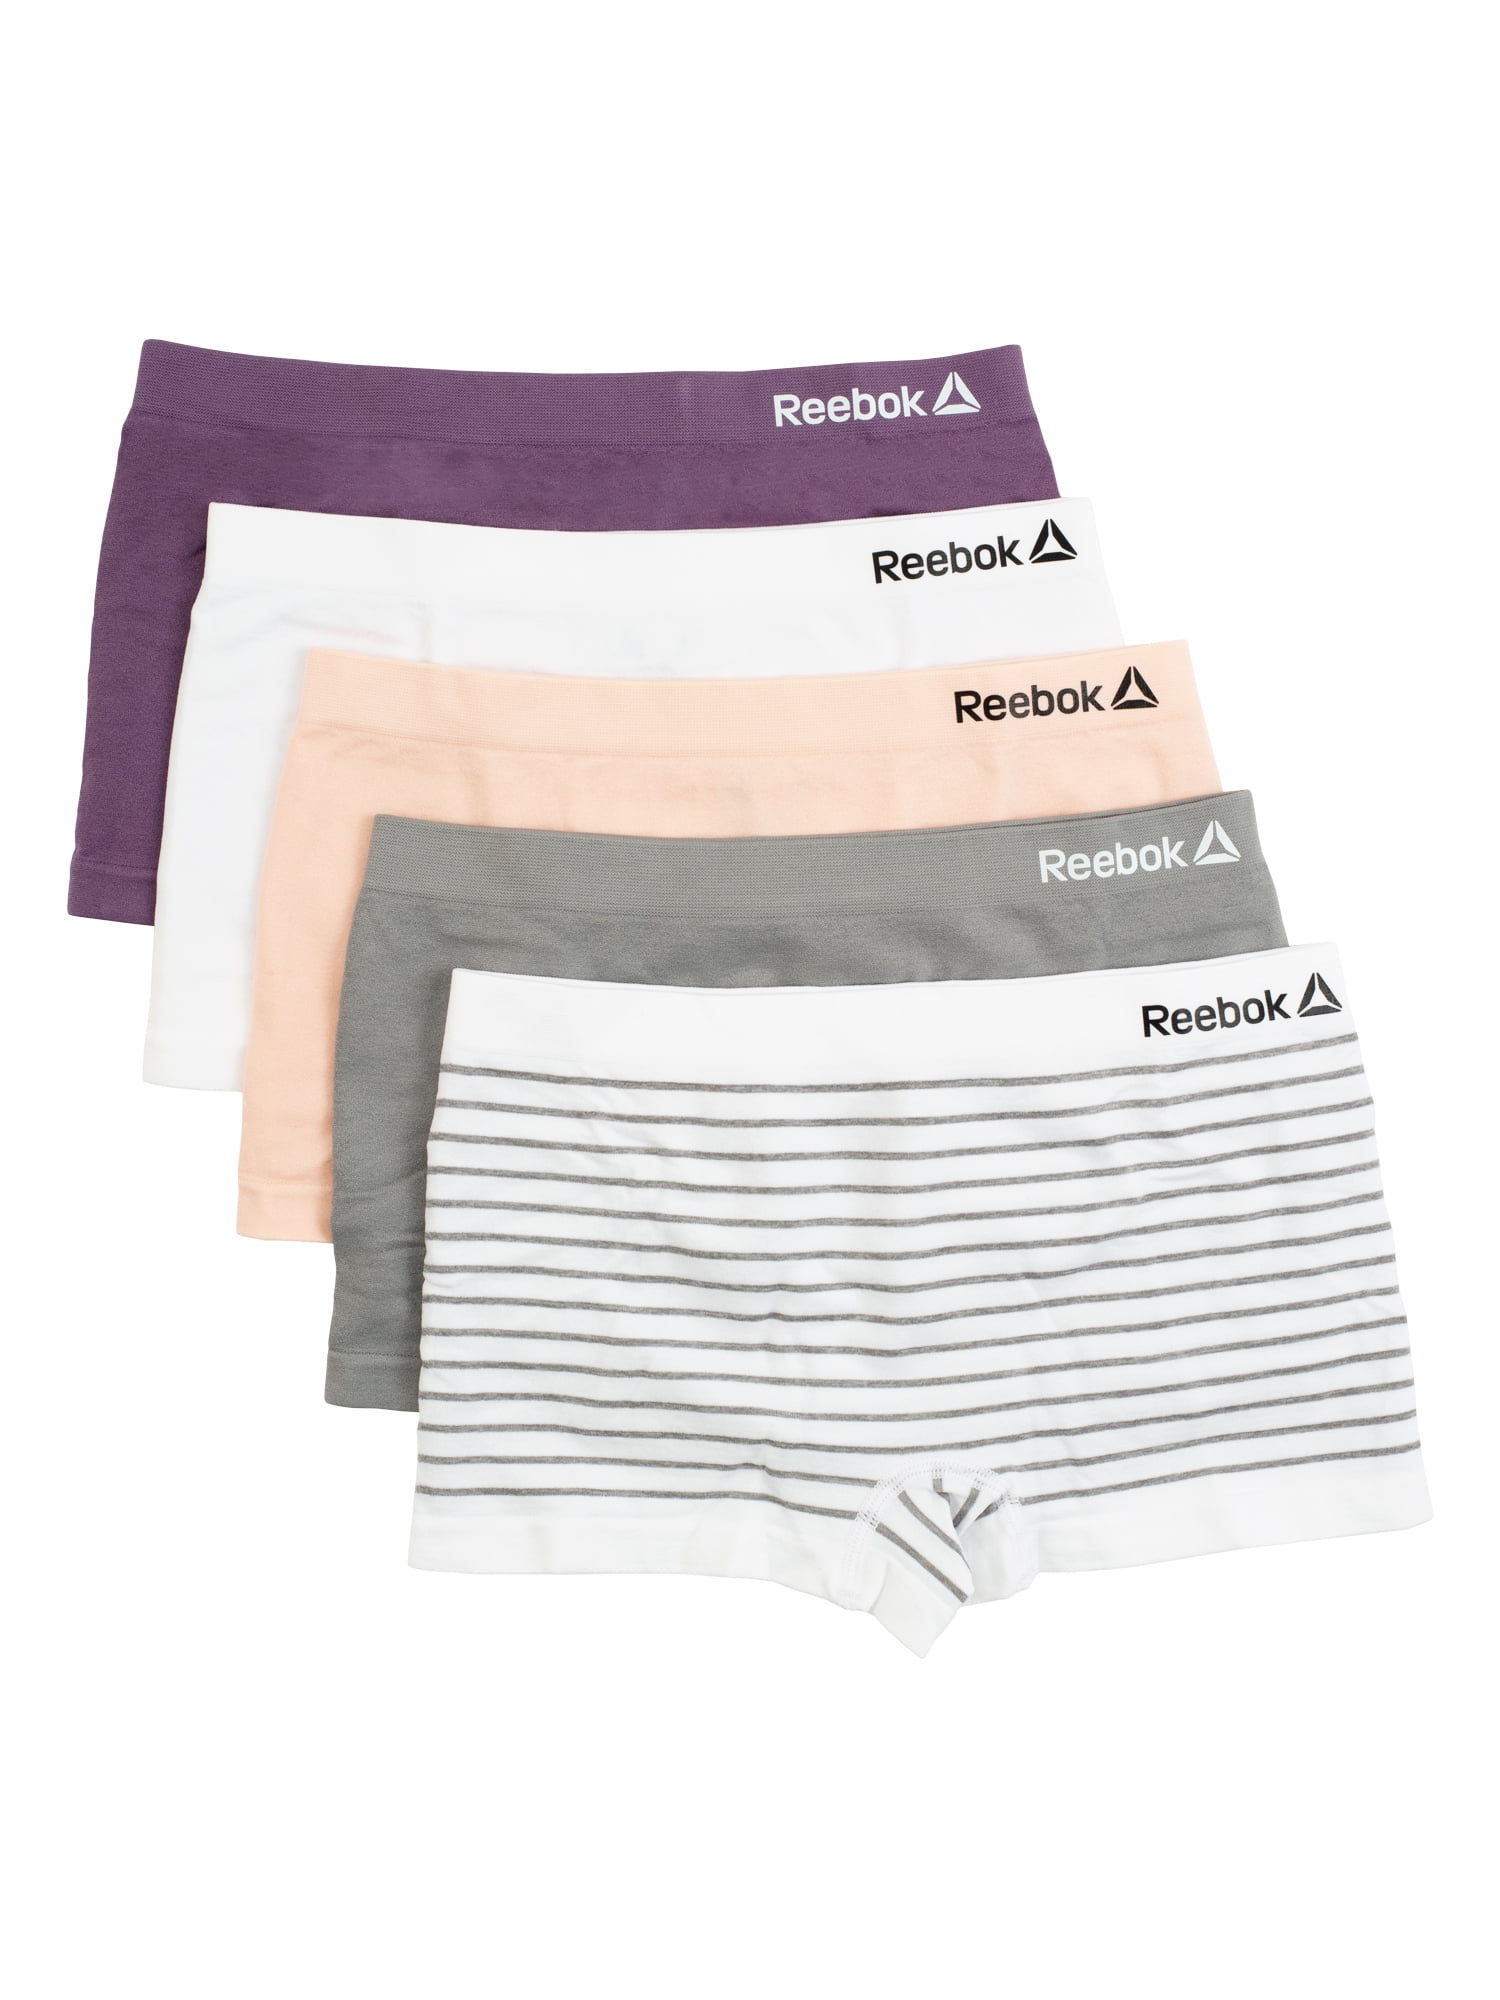 4 Pack Seamless Boyshort Panties Reebok Girls’ Underwear 